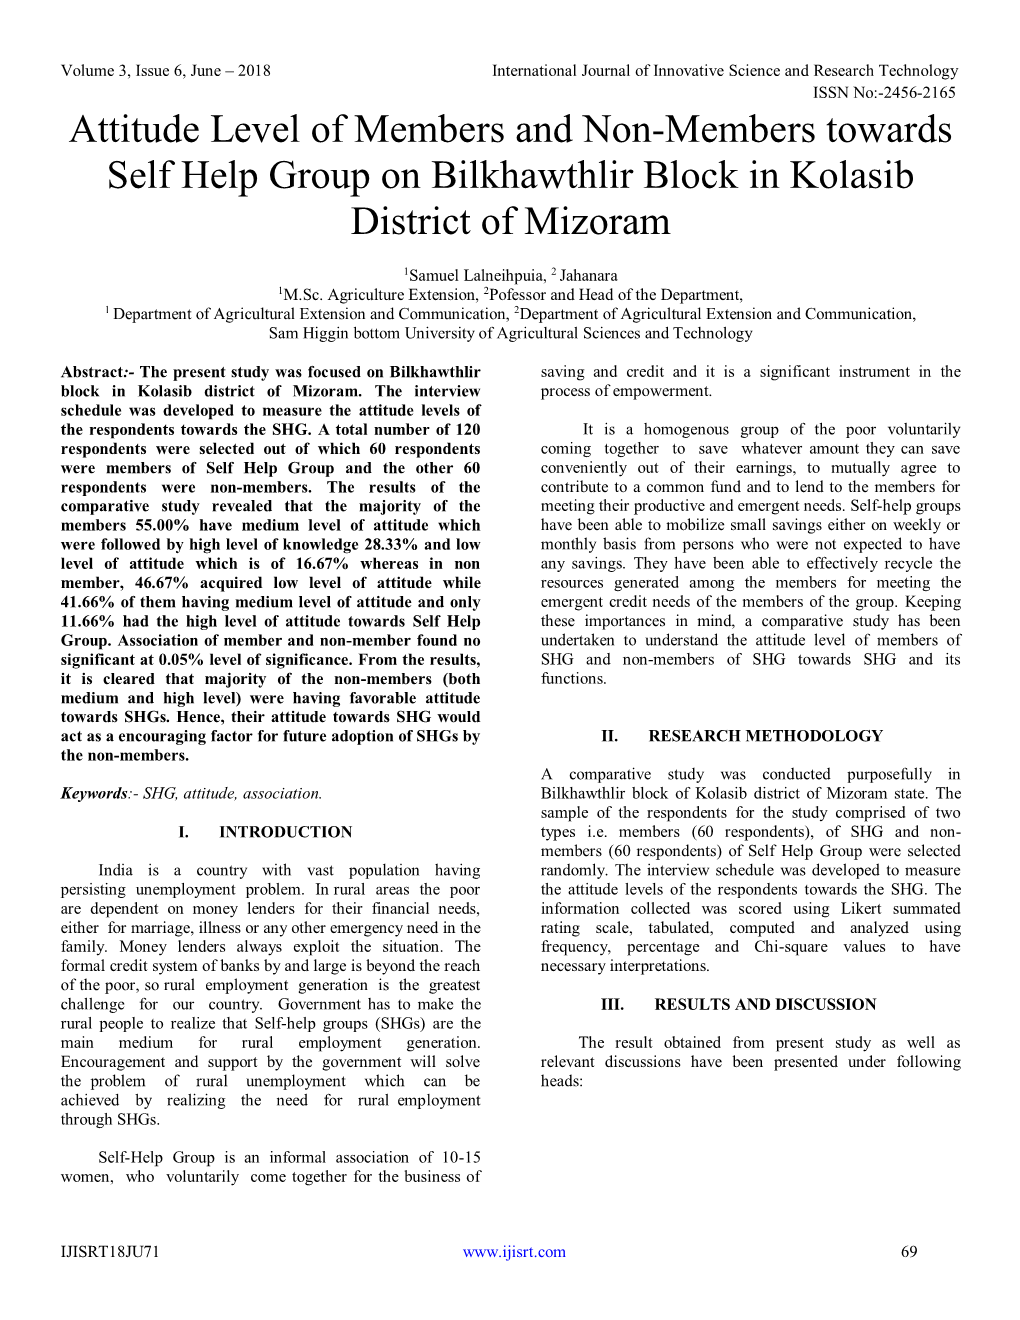 Attitude Level of Members and Non-Members Towards Self Help Group on Bilkhawthlir Block in Kolasib District of Mizoram